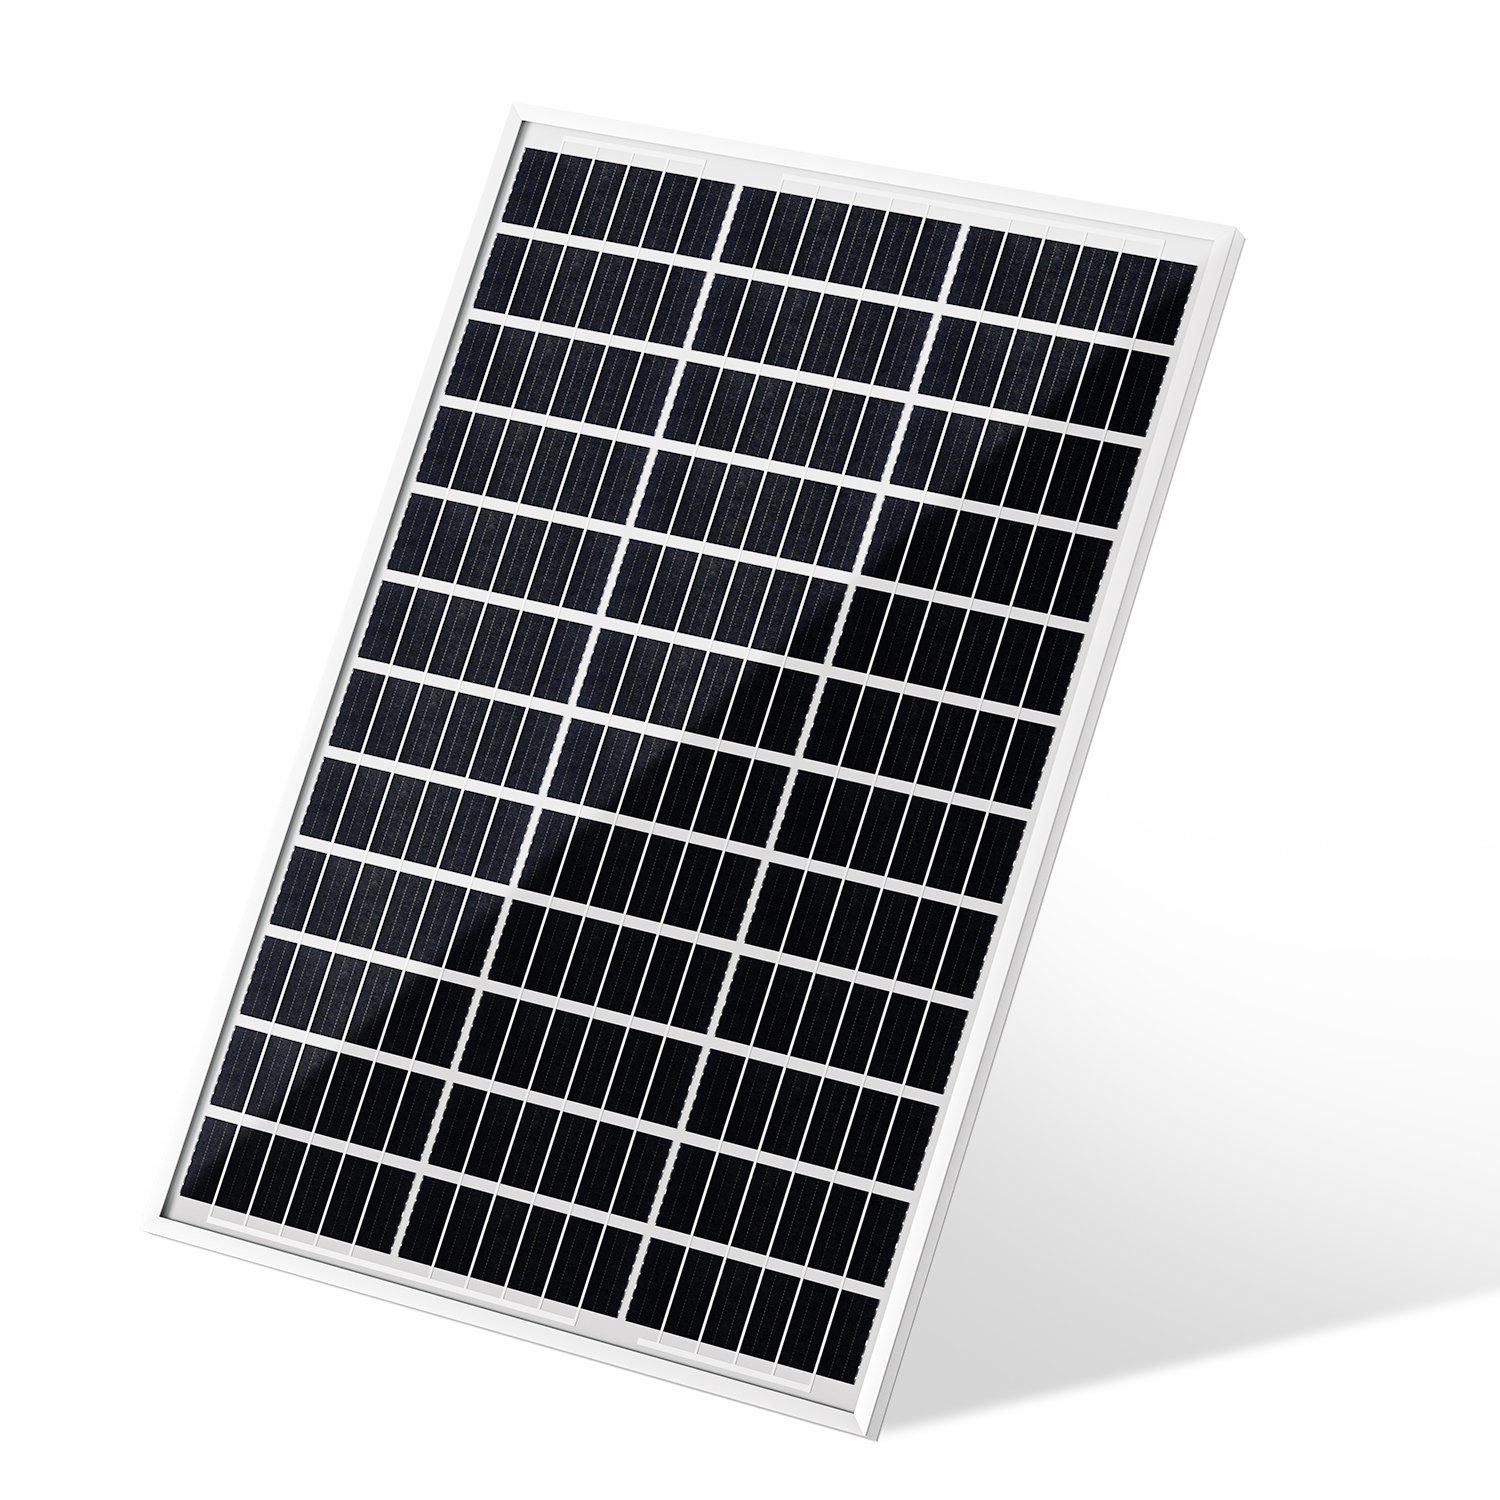 W Gimisgu 100W Solaranlage 100 Solarpanel Solarpanel Solaranlage 12V, Solarladegerät,